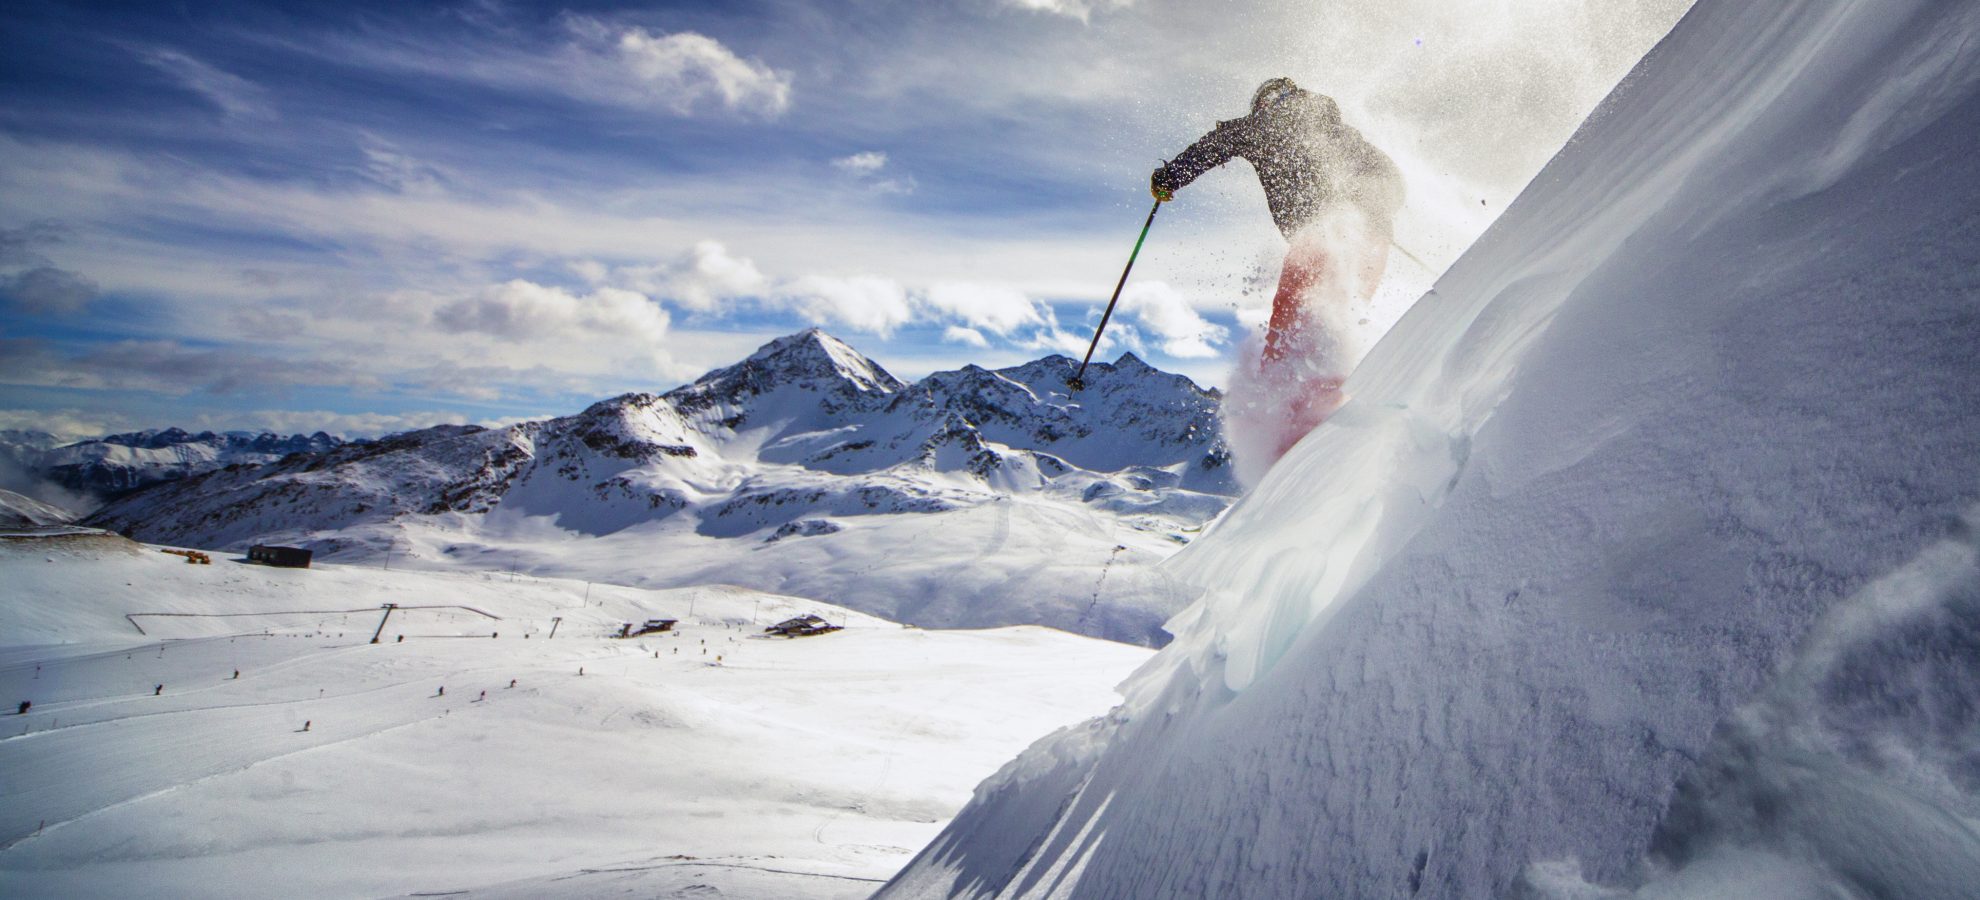 Oostenrijk, Tirol - Extreme skier